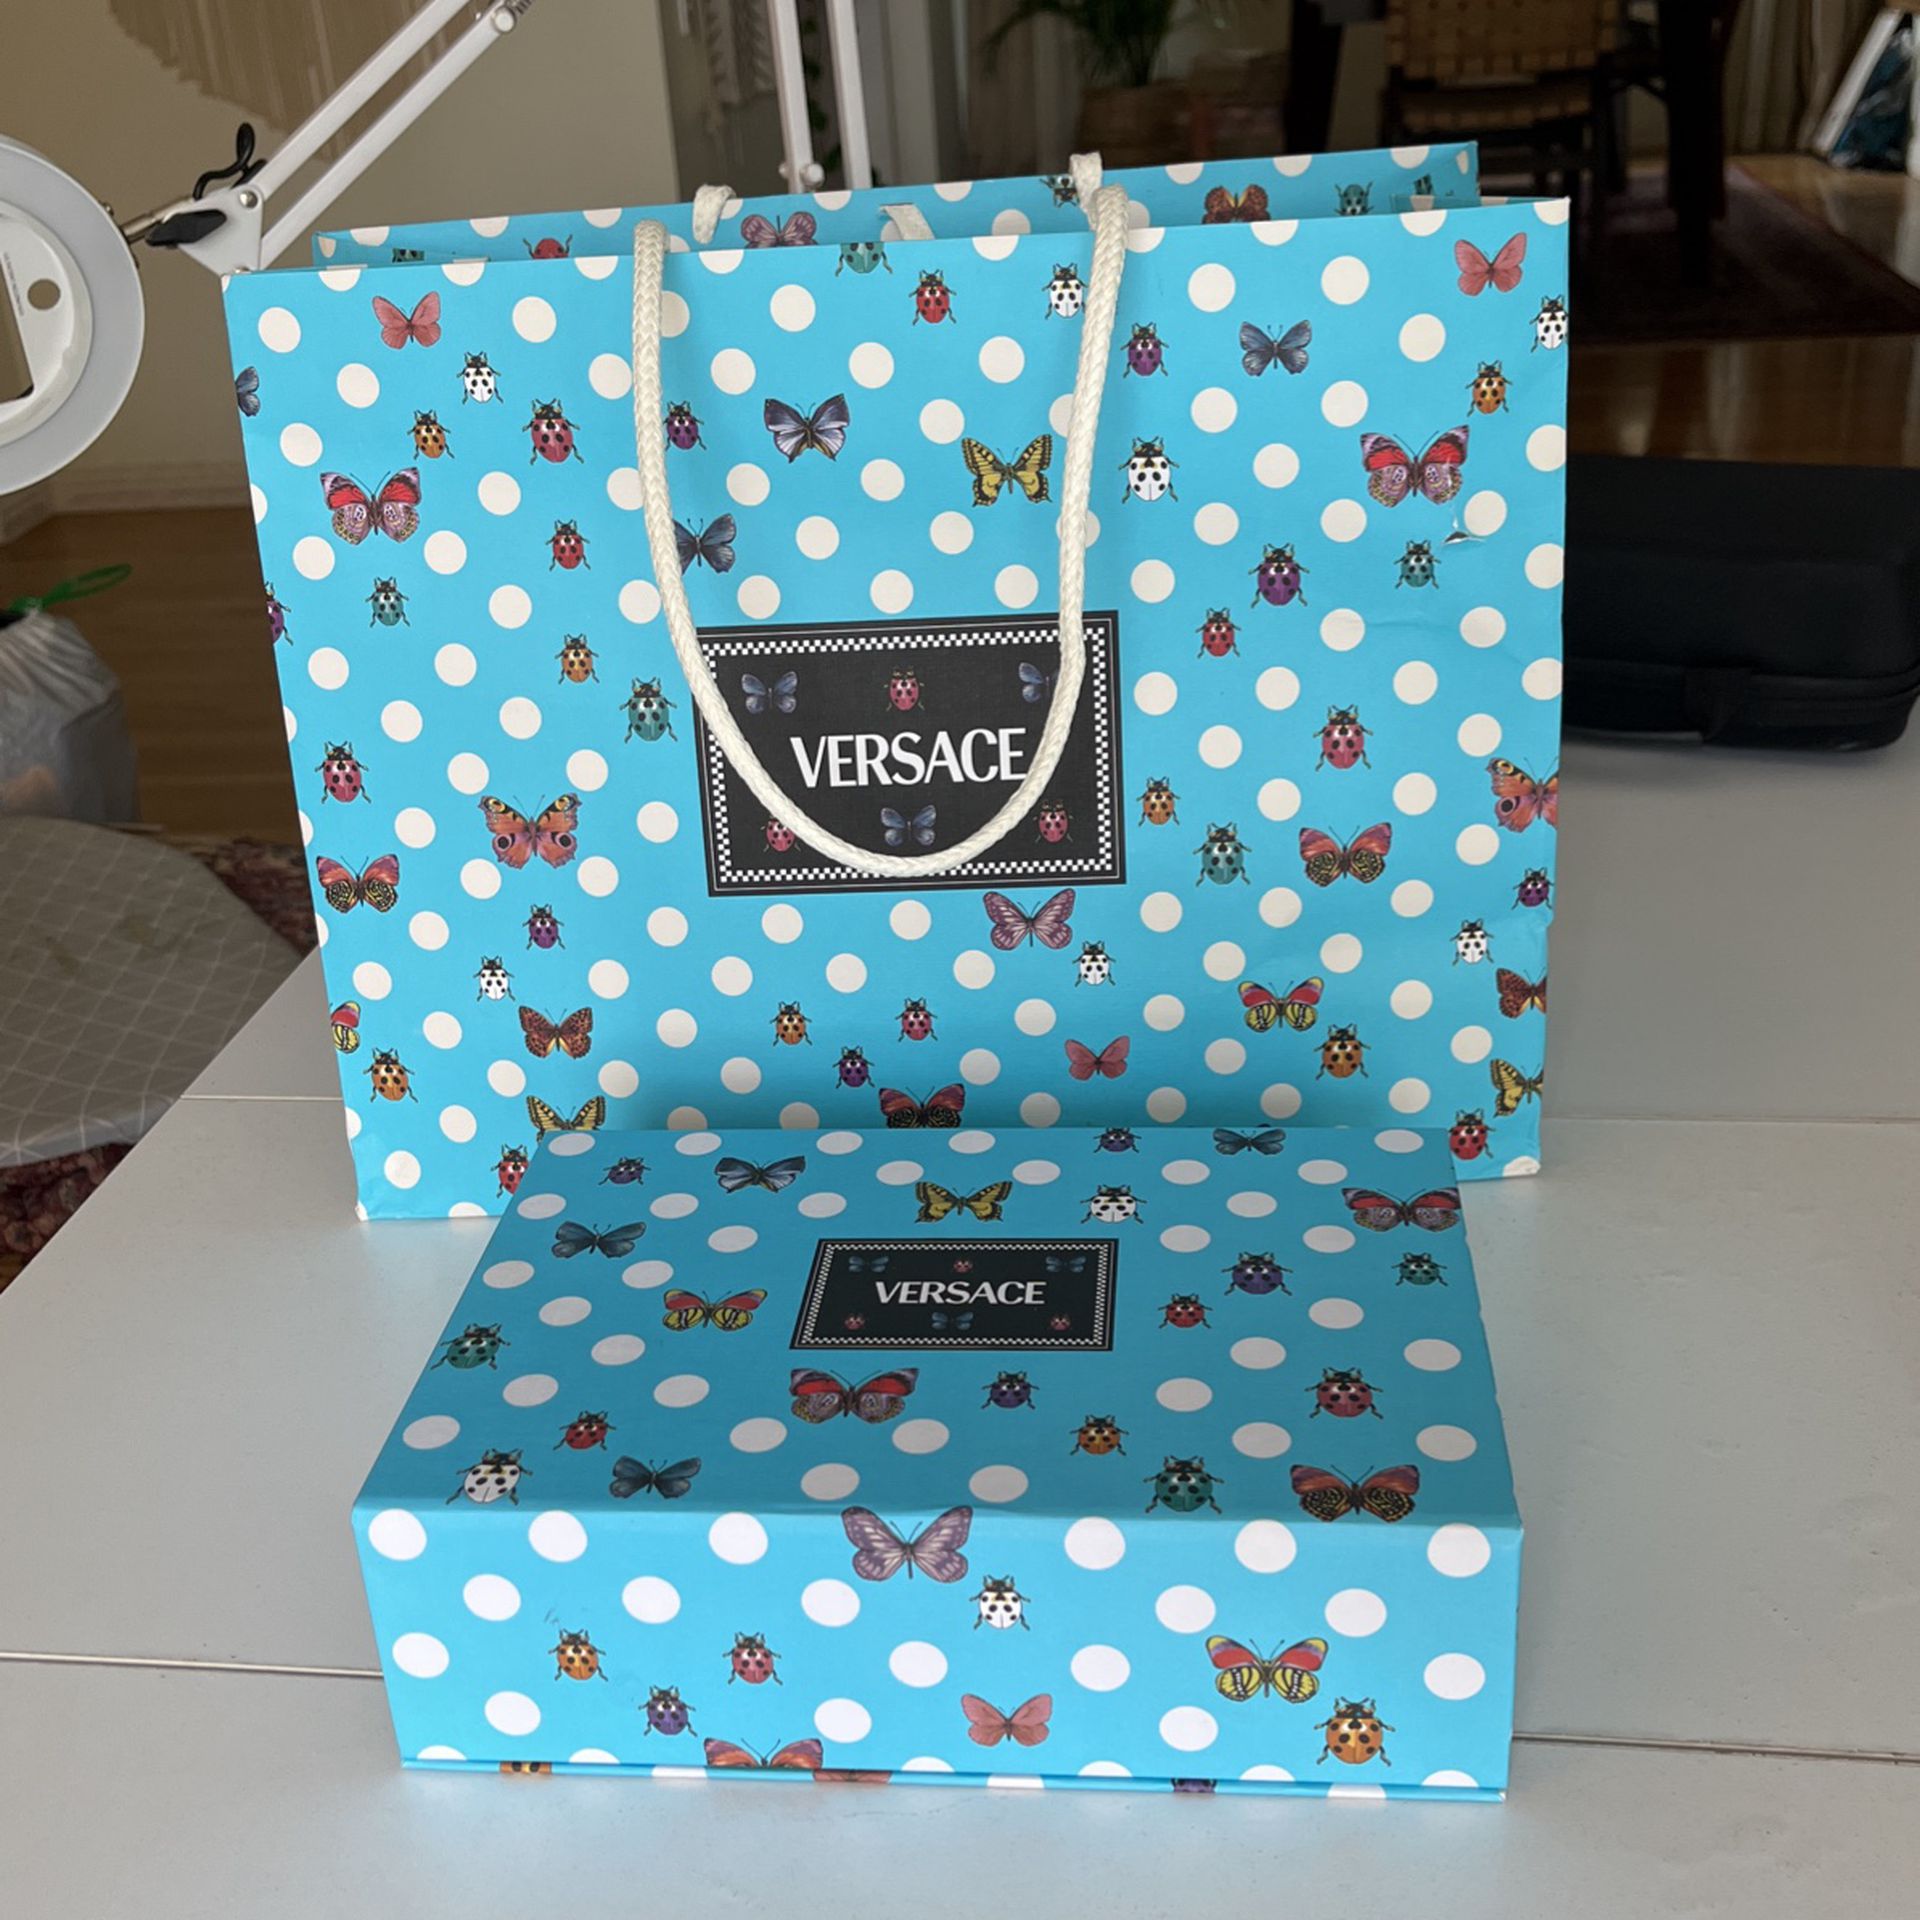 Versace Box & Shopping Bag - Polka Dot / Butterfly Print